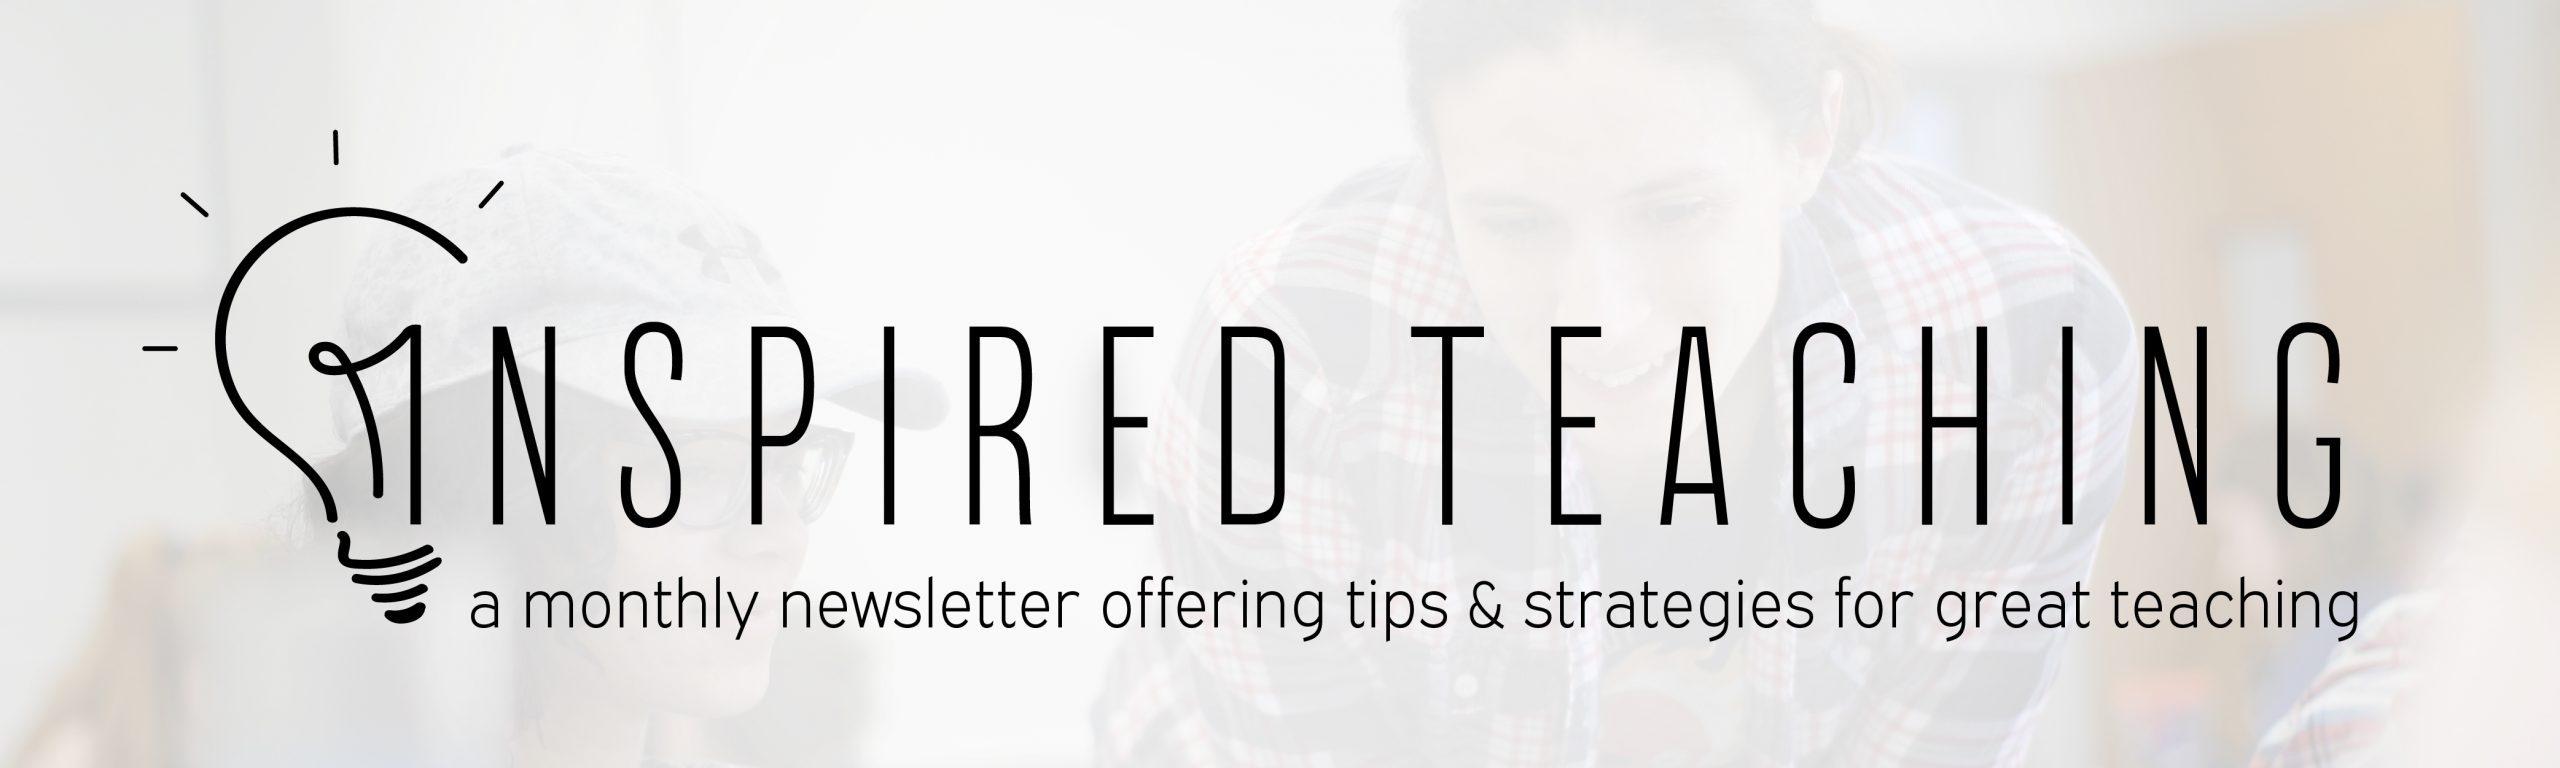 Inspired Teaching logo. A newsletter offering tips & strategies for great teaching.